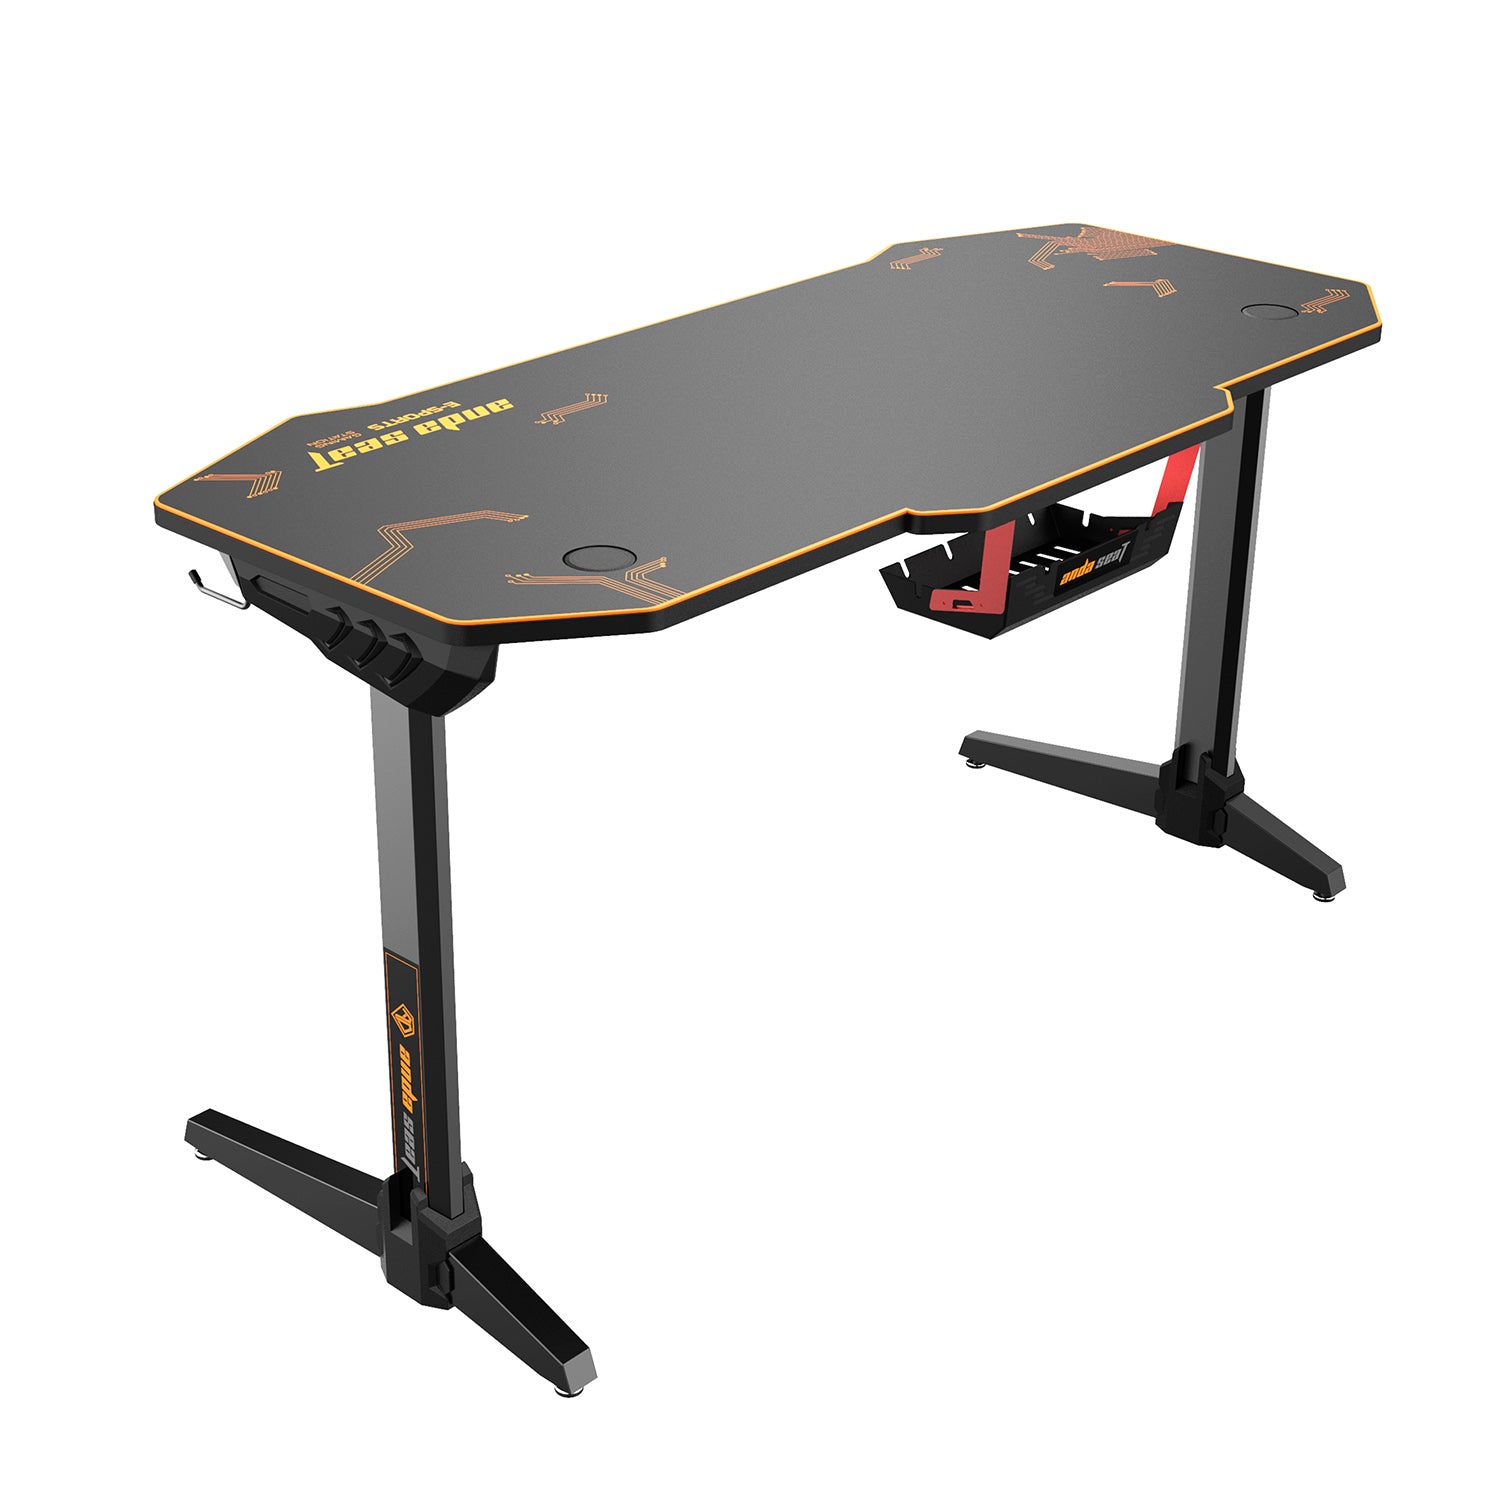 Anda Seat Eagle 2 Gaming Desk (Dimension: 140x60 CM) - Black